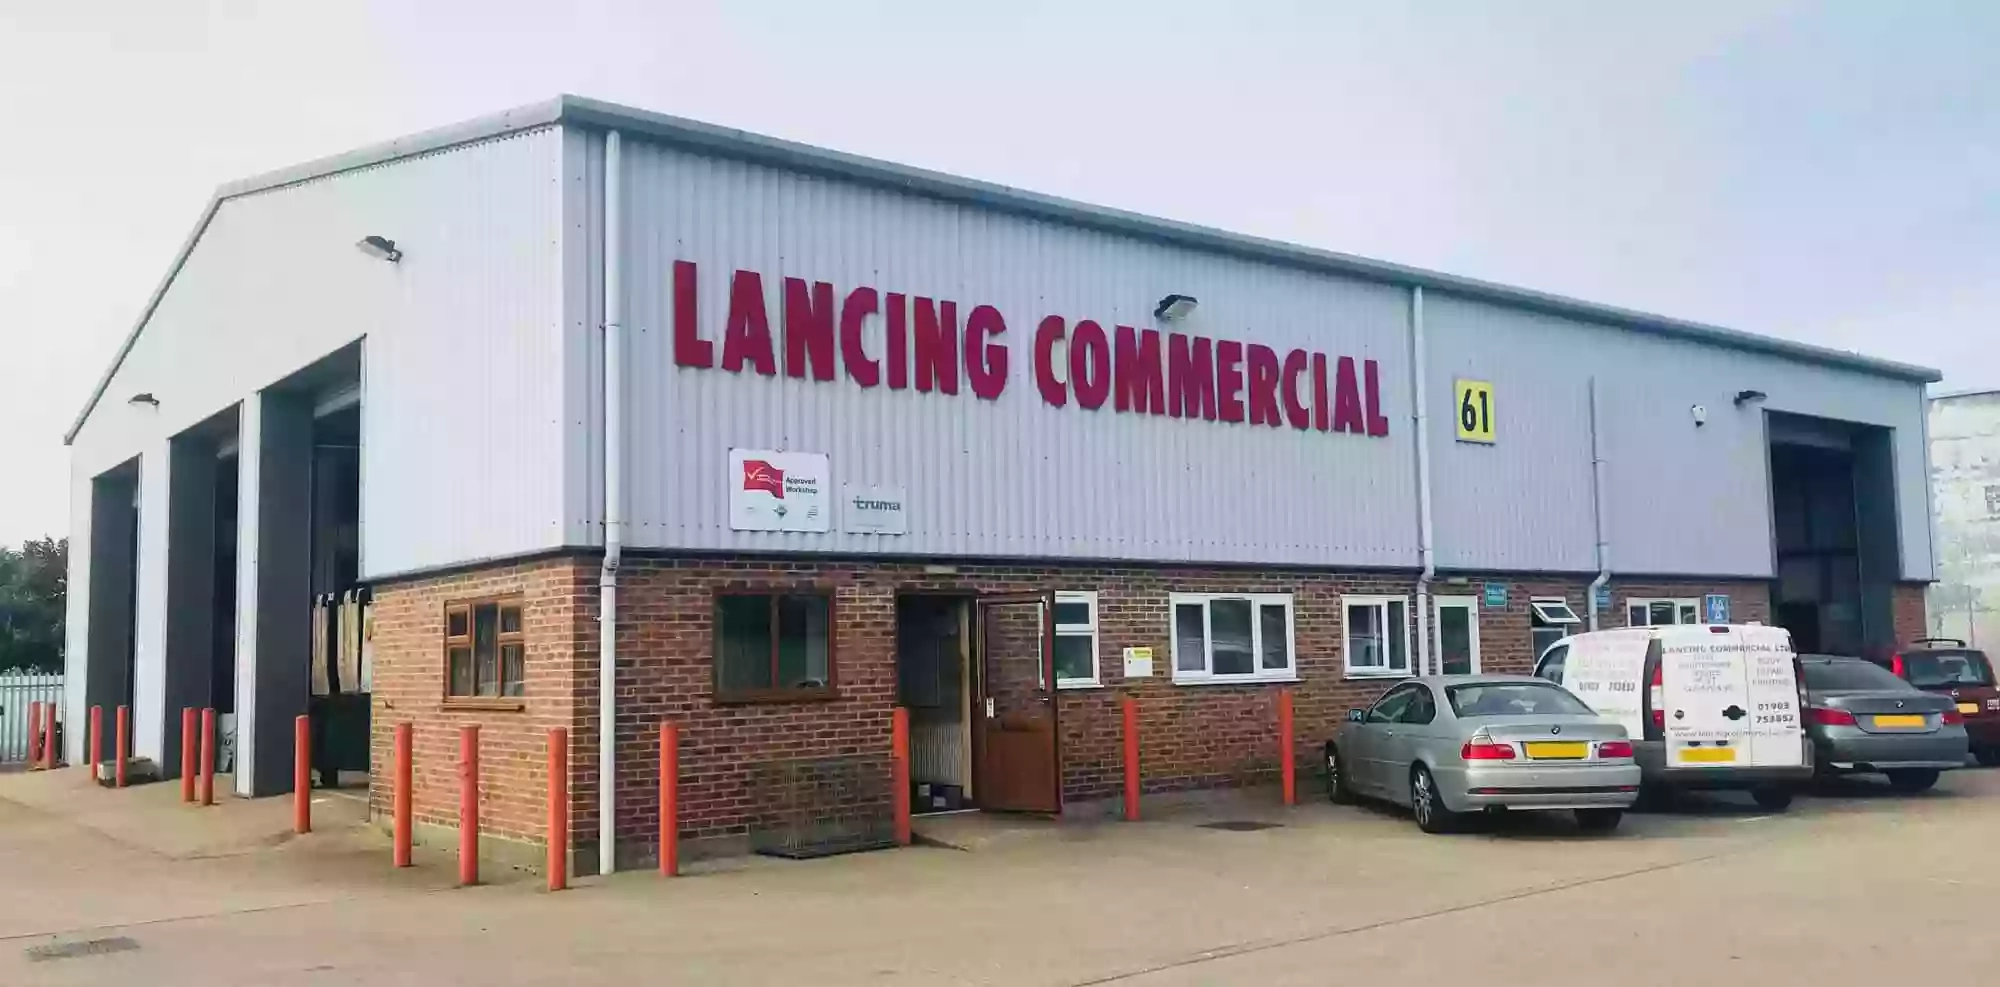 Lancing Commercial Ltd